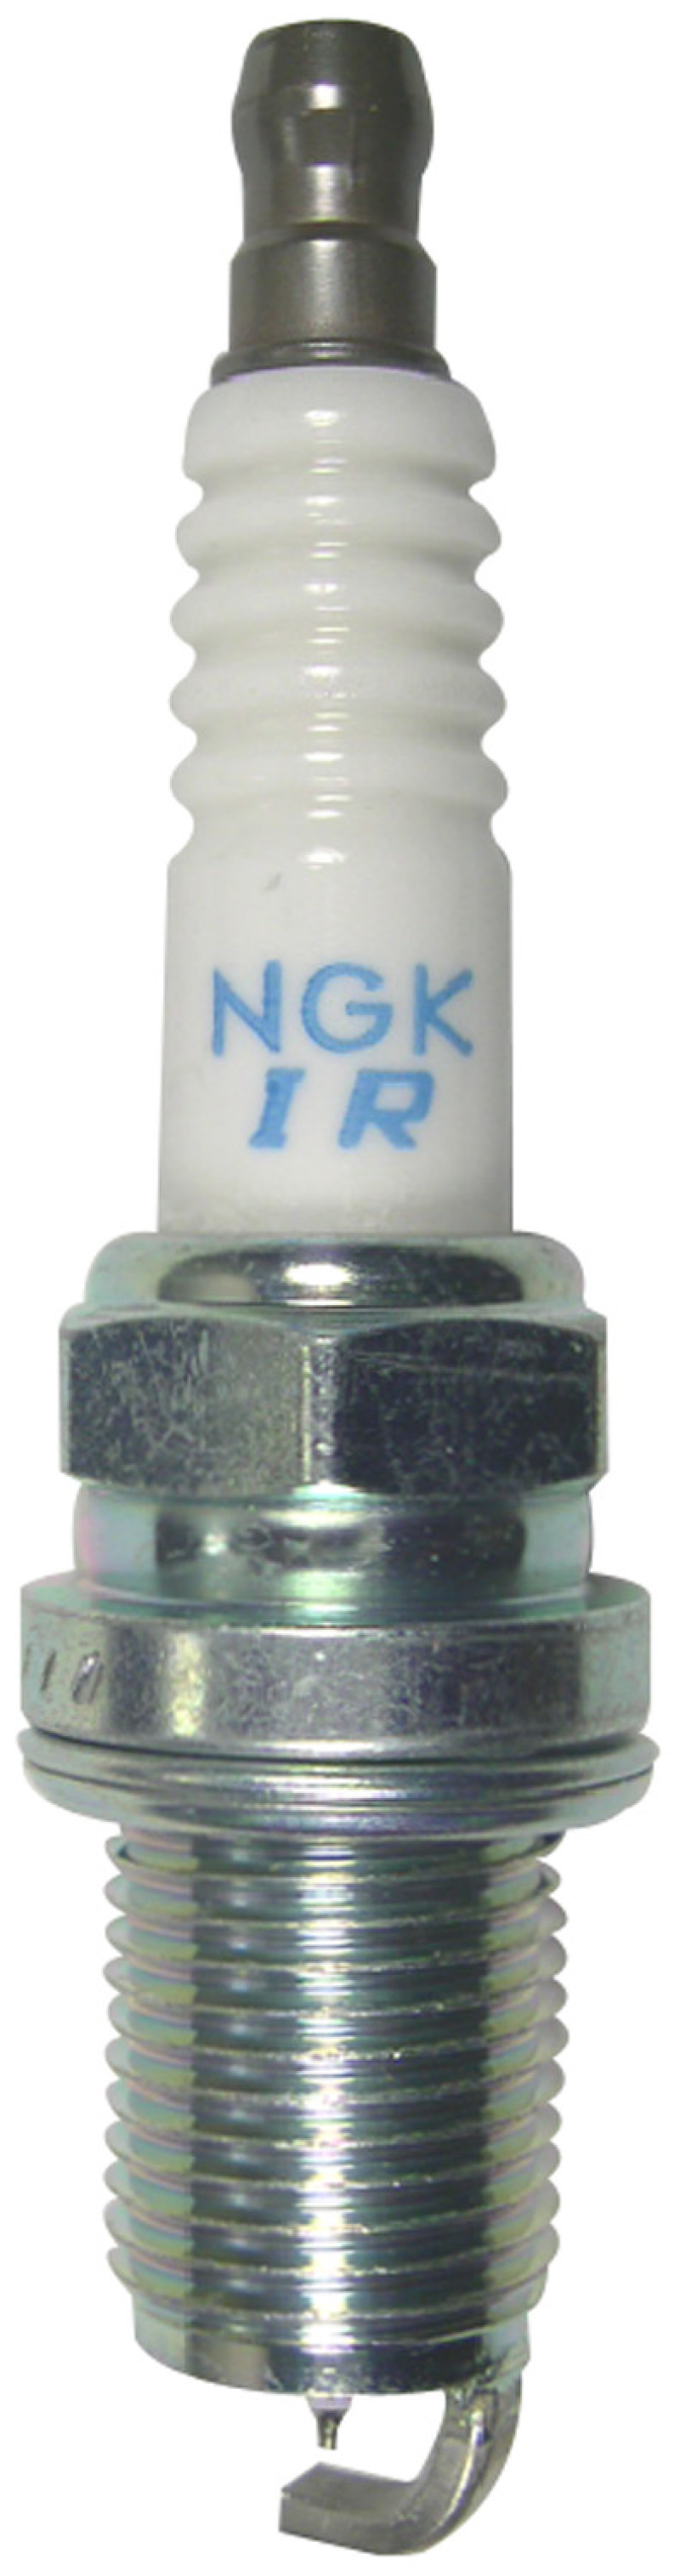 NGK Laser Iridium Spark Plug Box of 4 (IFR5L11) - 6502